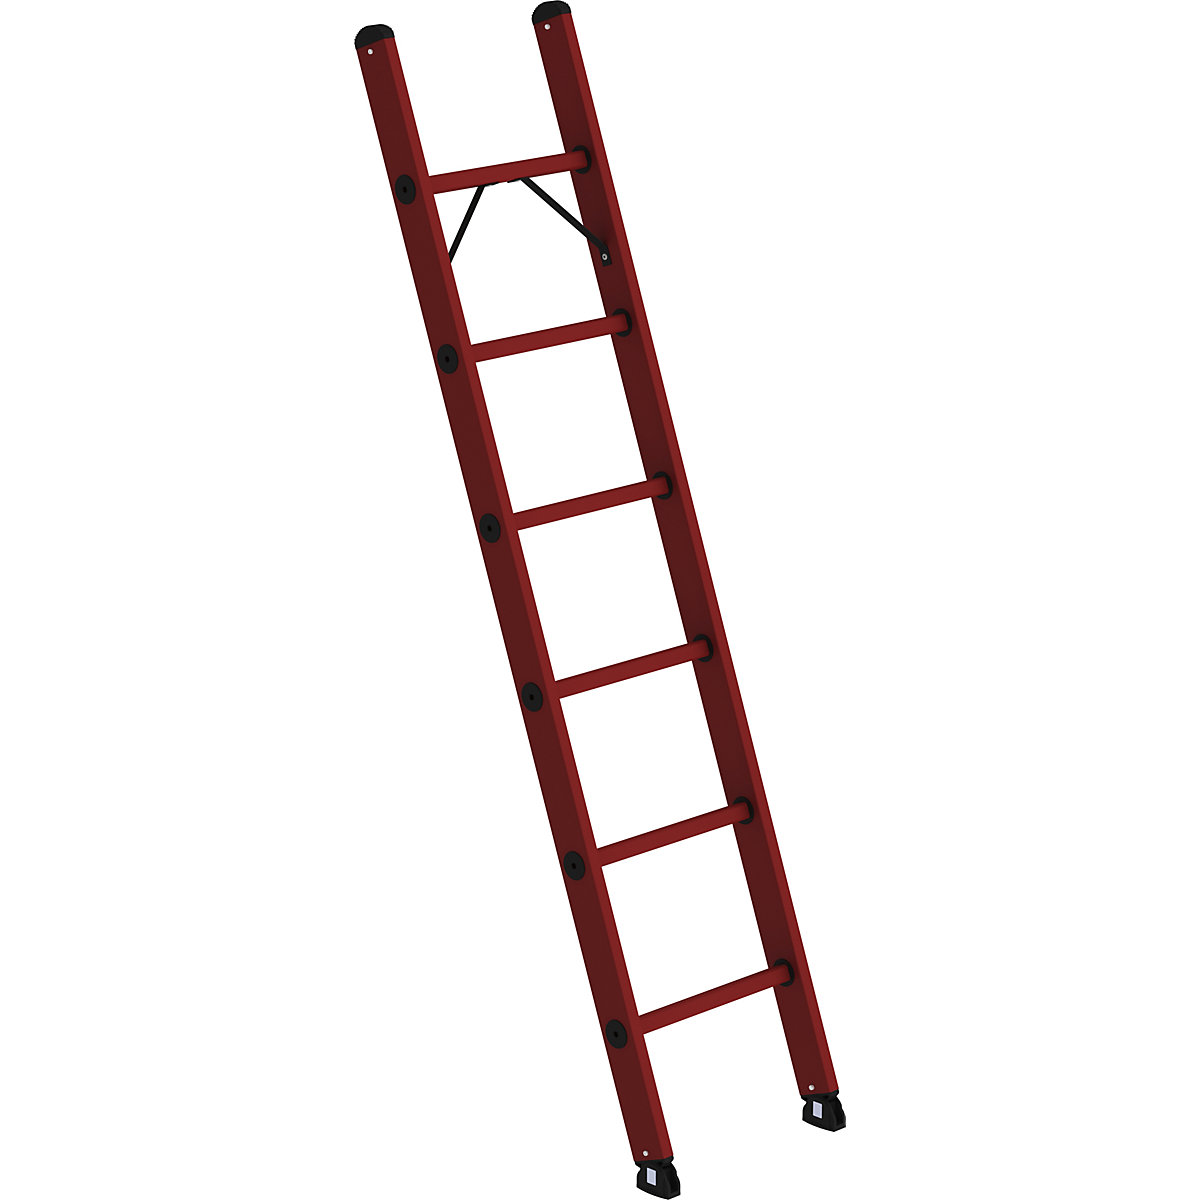 Full plastic lean to ladder - MUNK